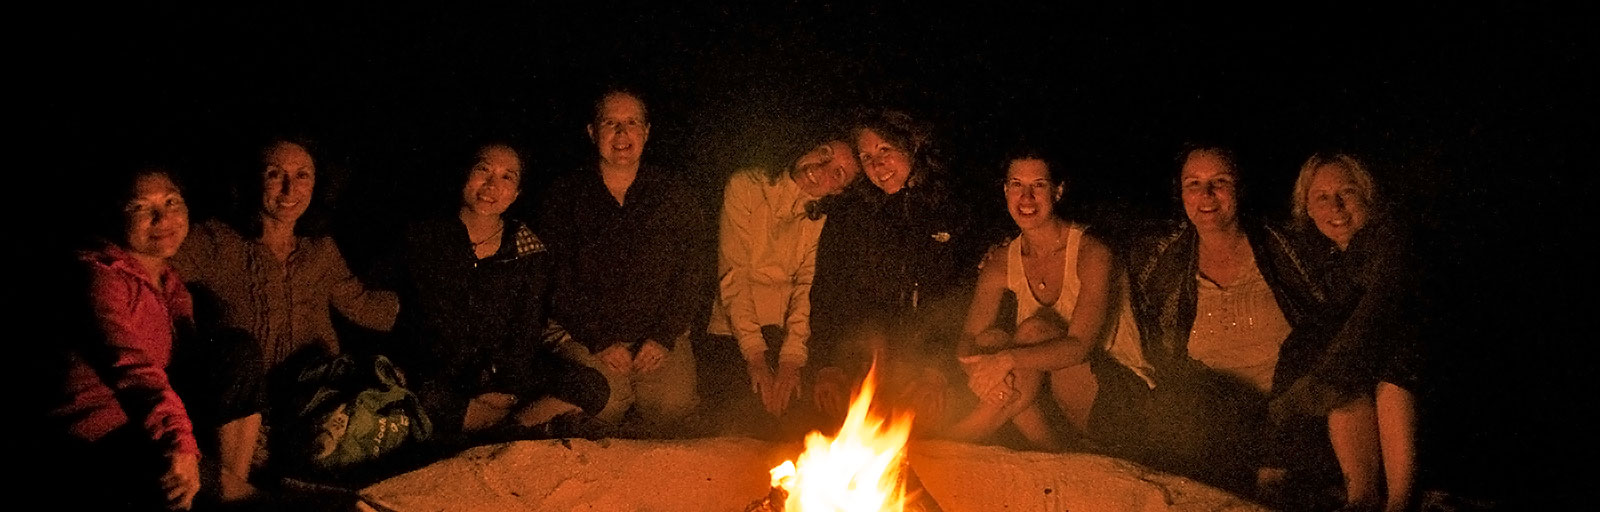 Mexico Yoga Retreat Reviews: Bonfire with Friends